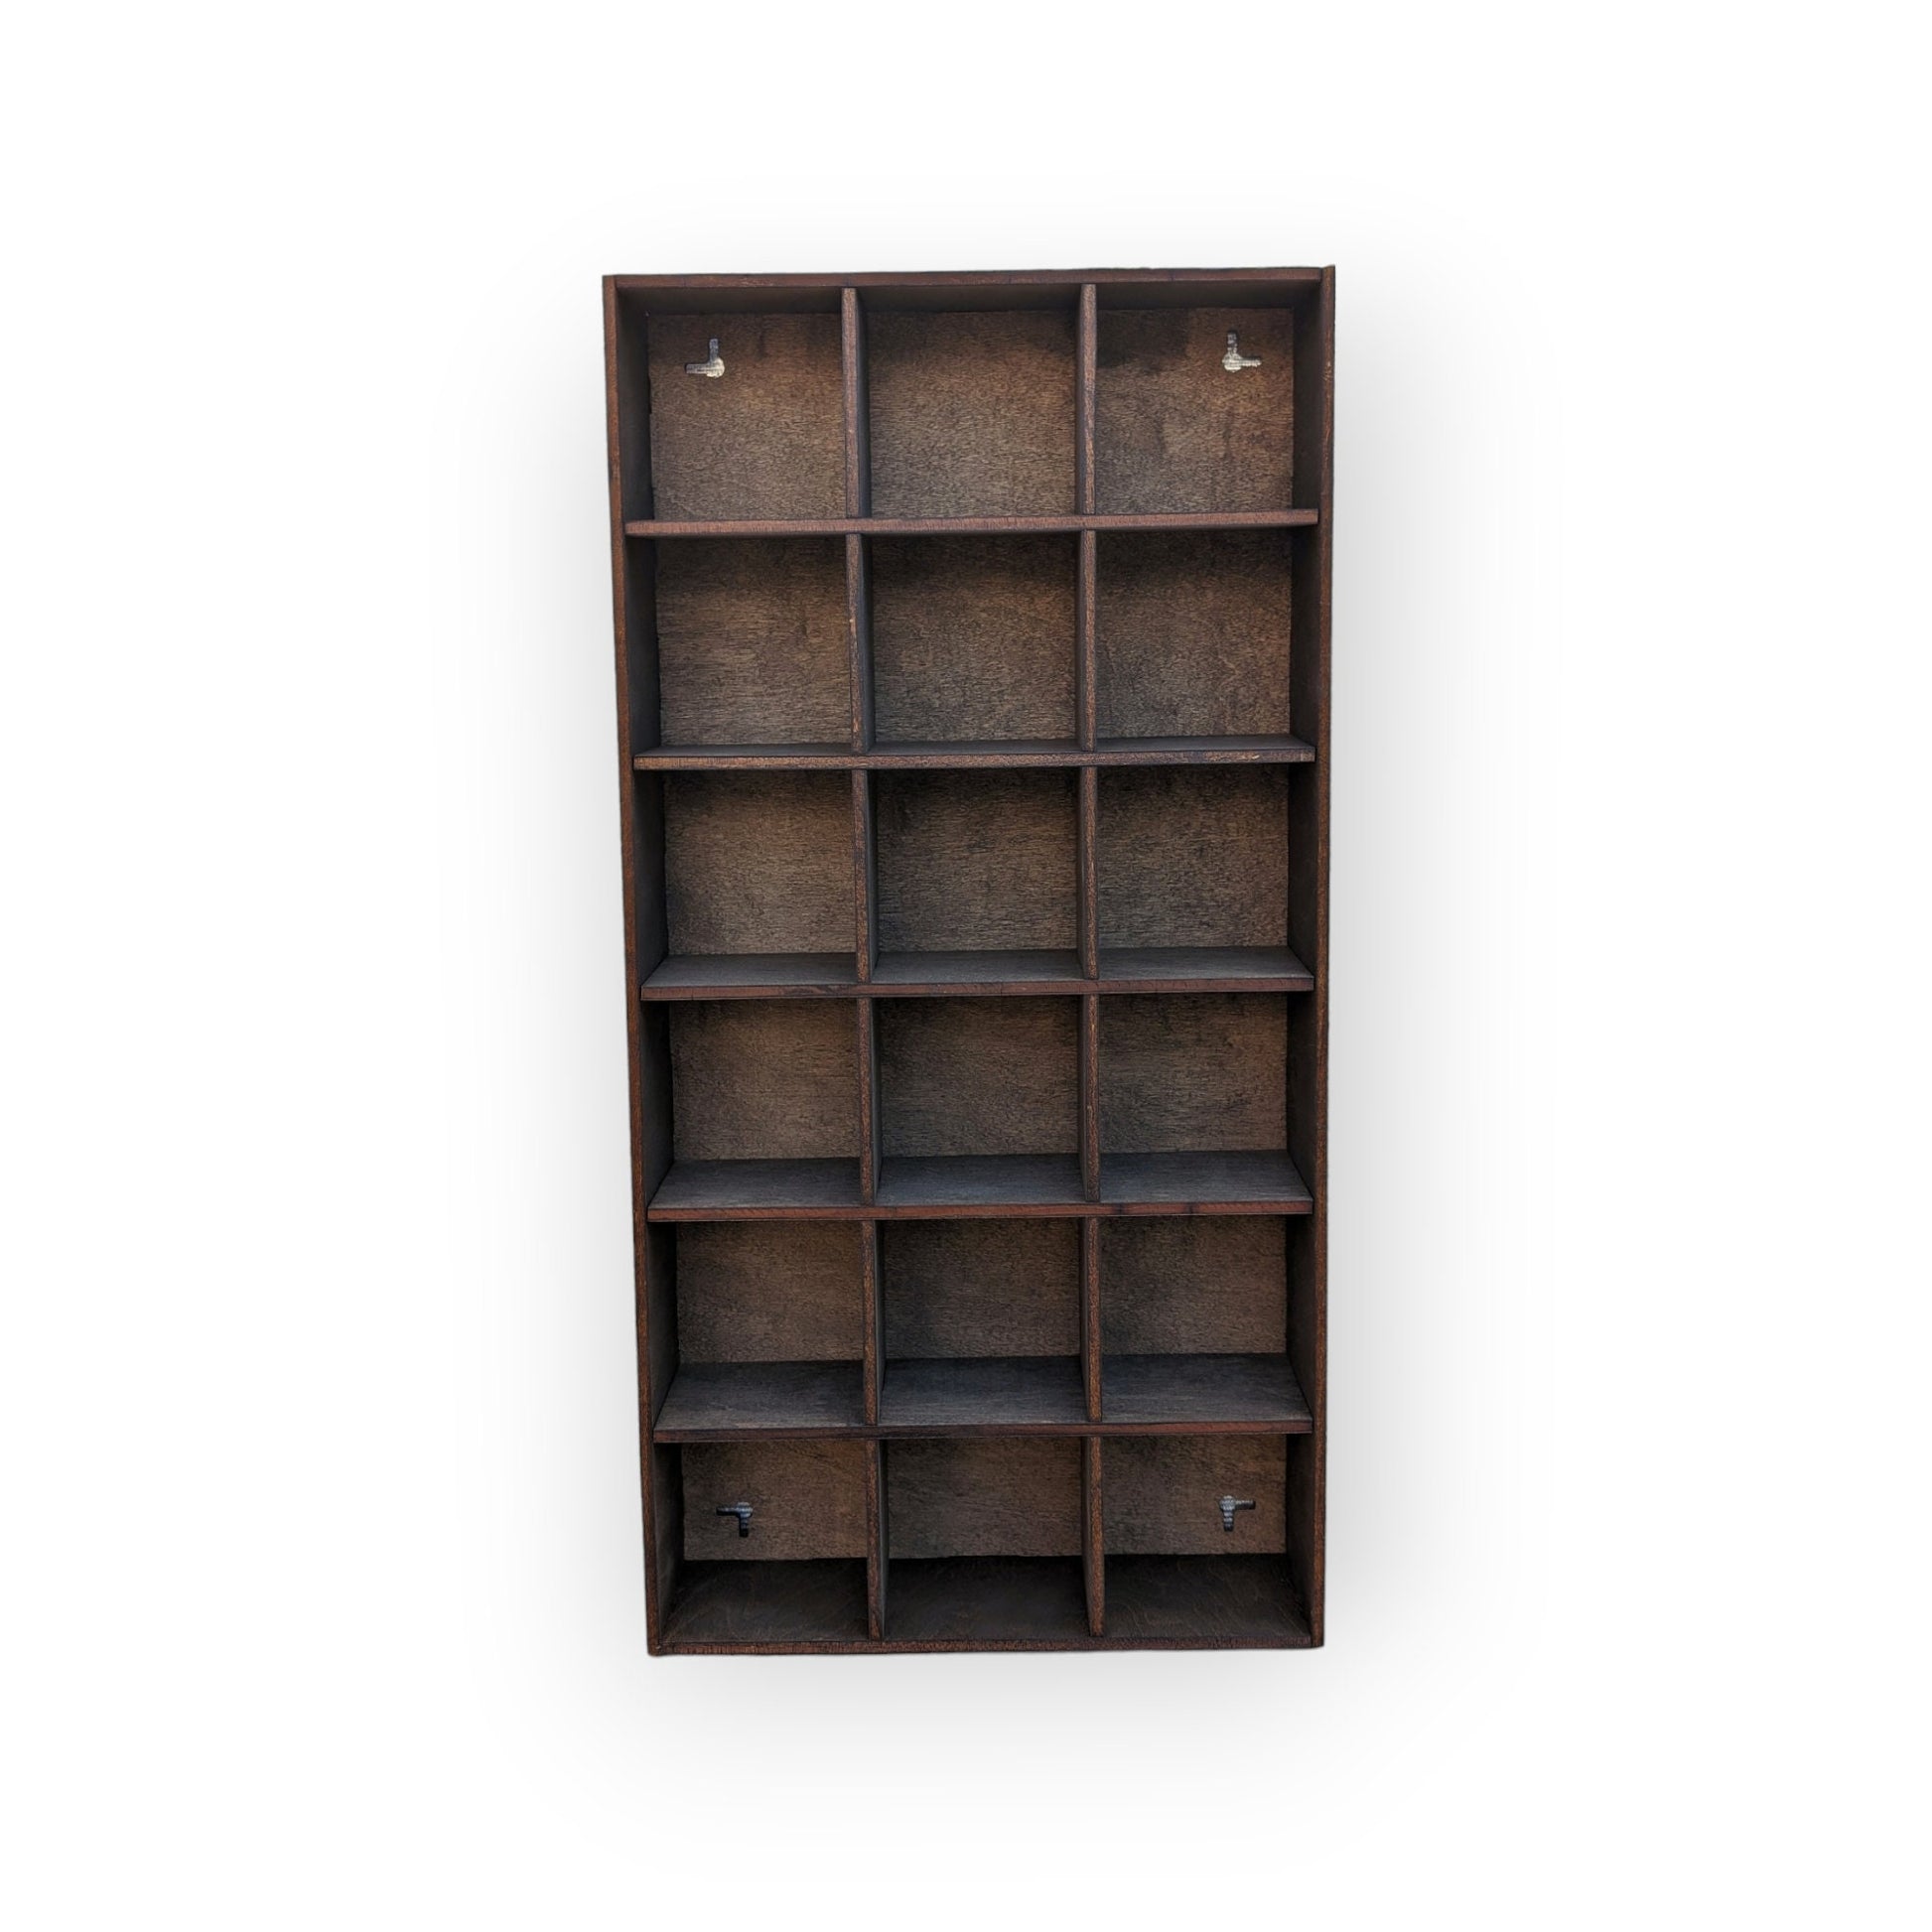 18 Compartment Wooden Display Shelf - Trinket Shelf - Curio Cabinet- Knick Knack Collection Display - Printer Tray -Figure Organizer Display